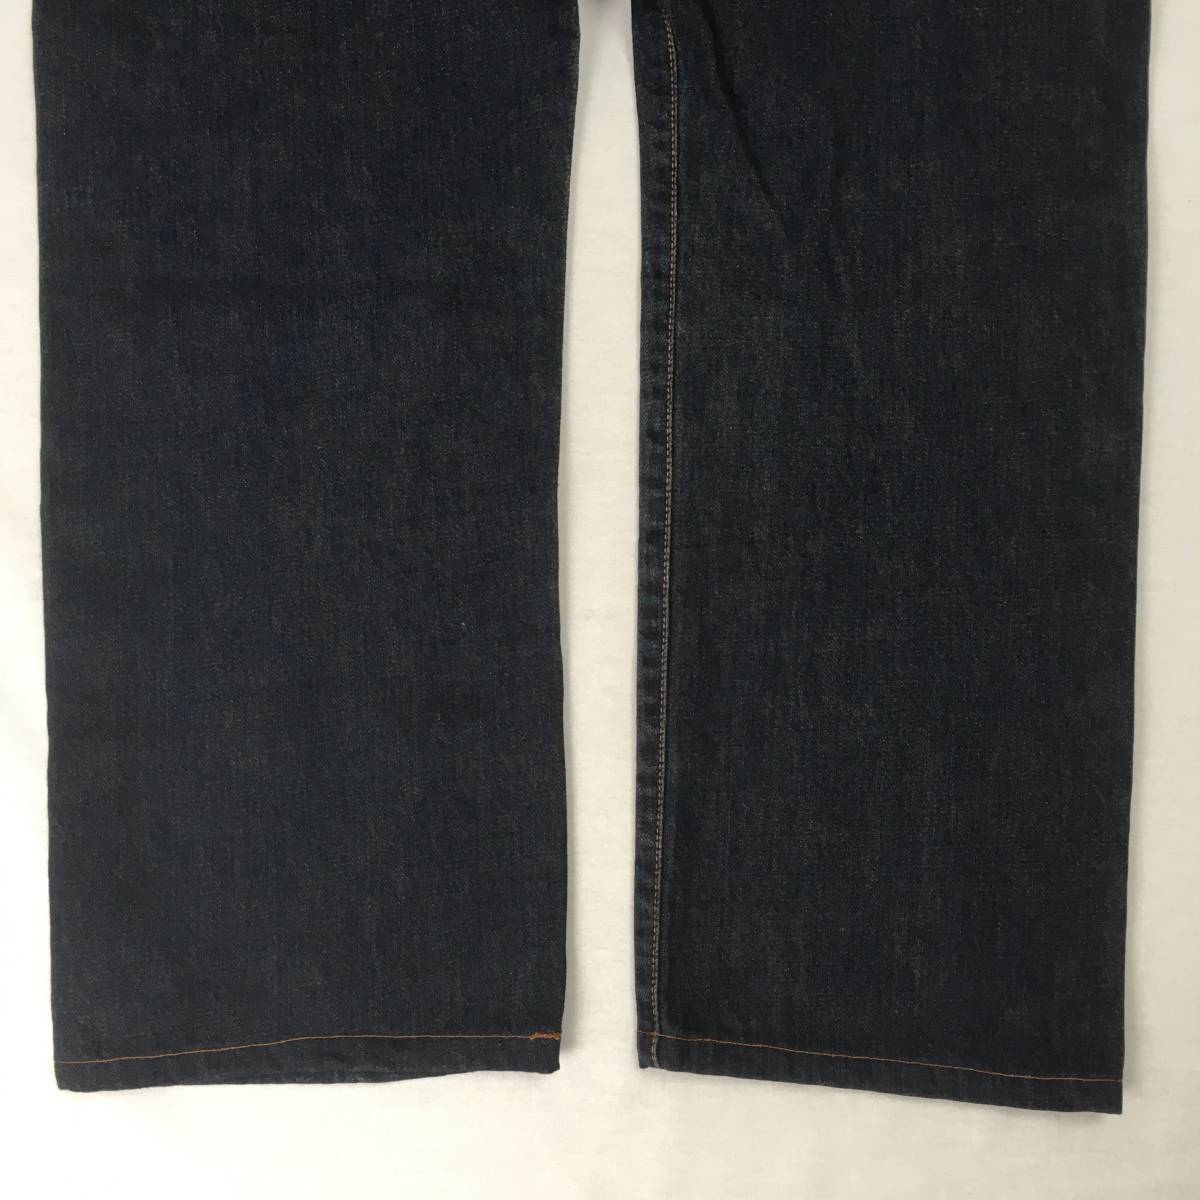 EDWIN Edwin 505XX 5053 сделано в Японии Denim брюки джинсы W32 L33 cell biji красный уголок Zip fly б/у обработка 